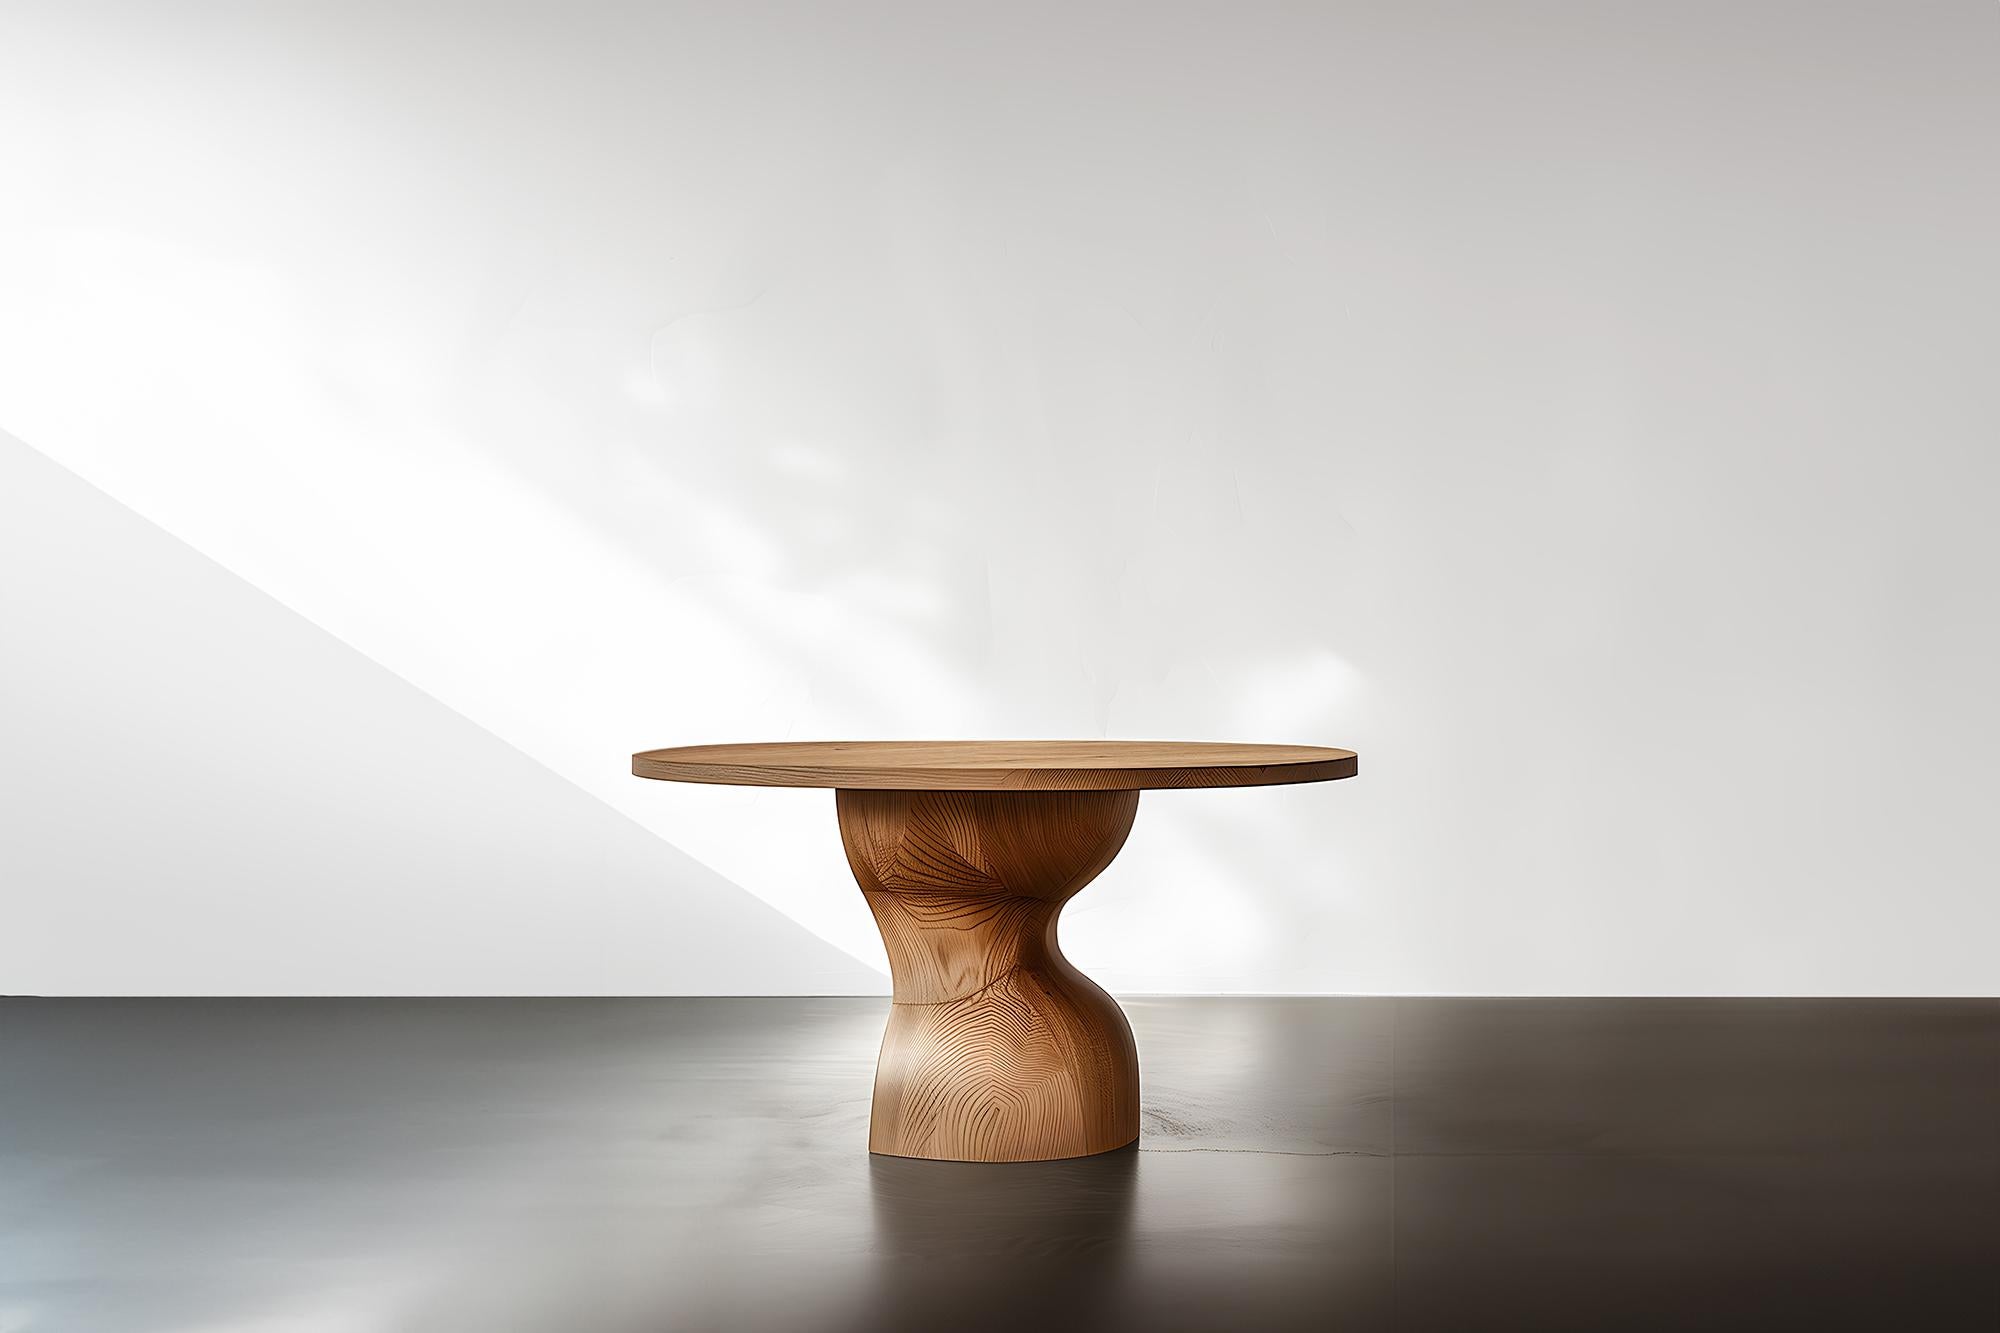 Tables de jeu Socle n°17, design NONO, jeu en bois massif

--

Voici la 